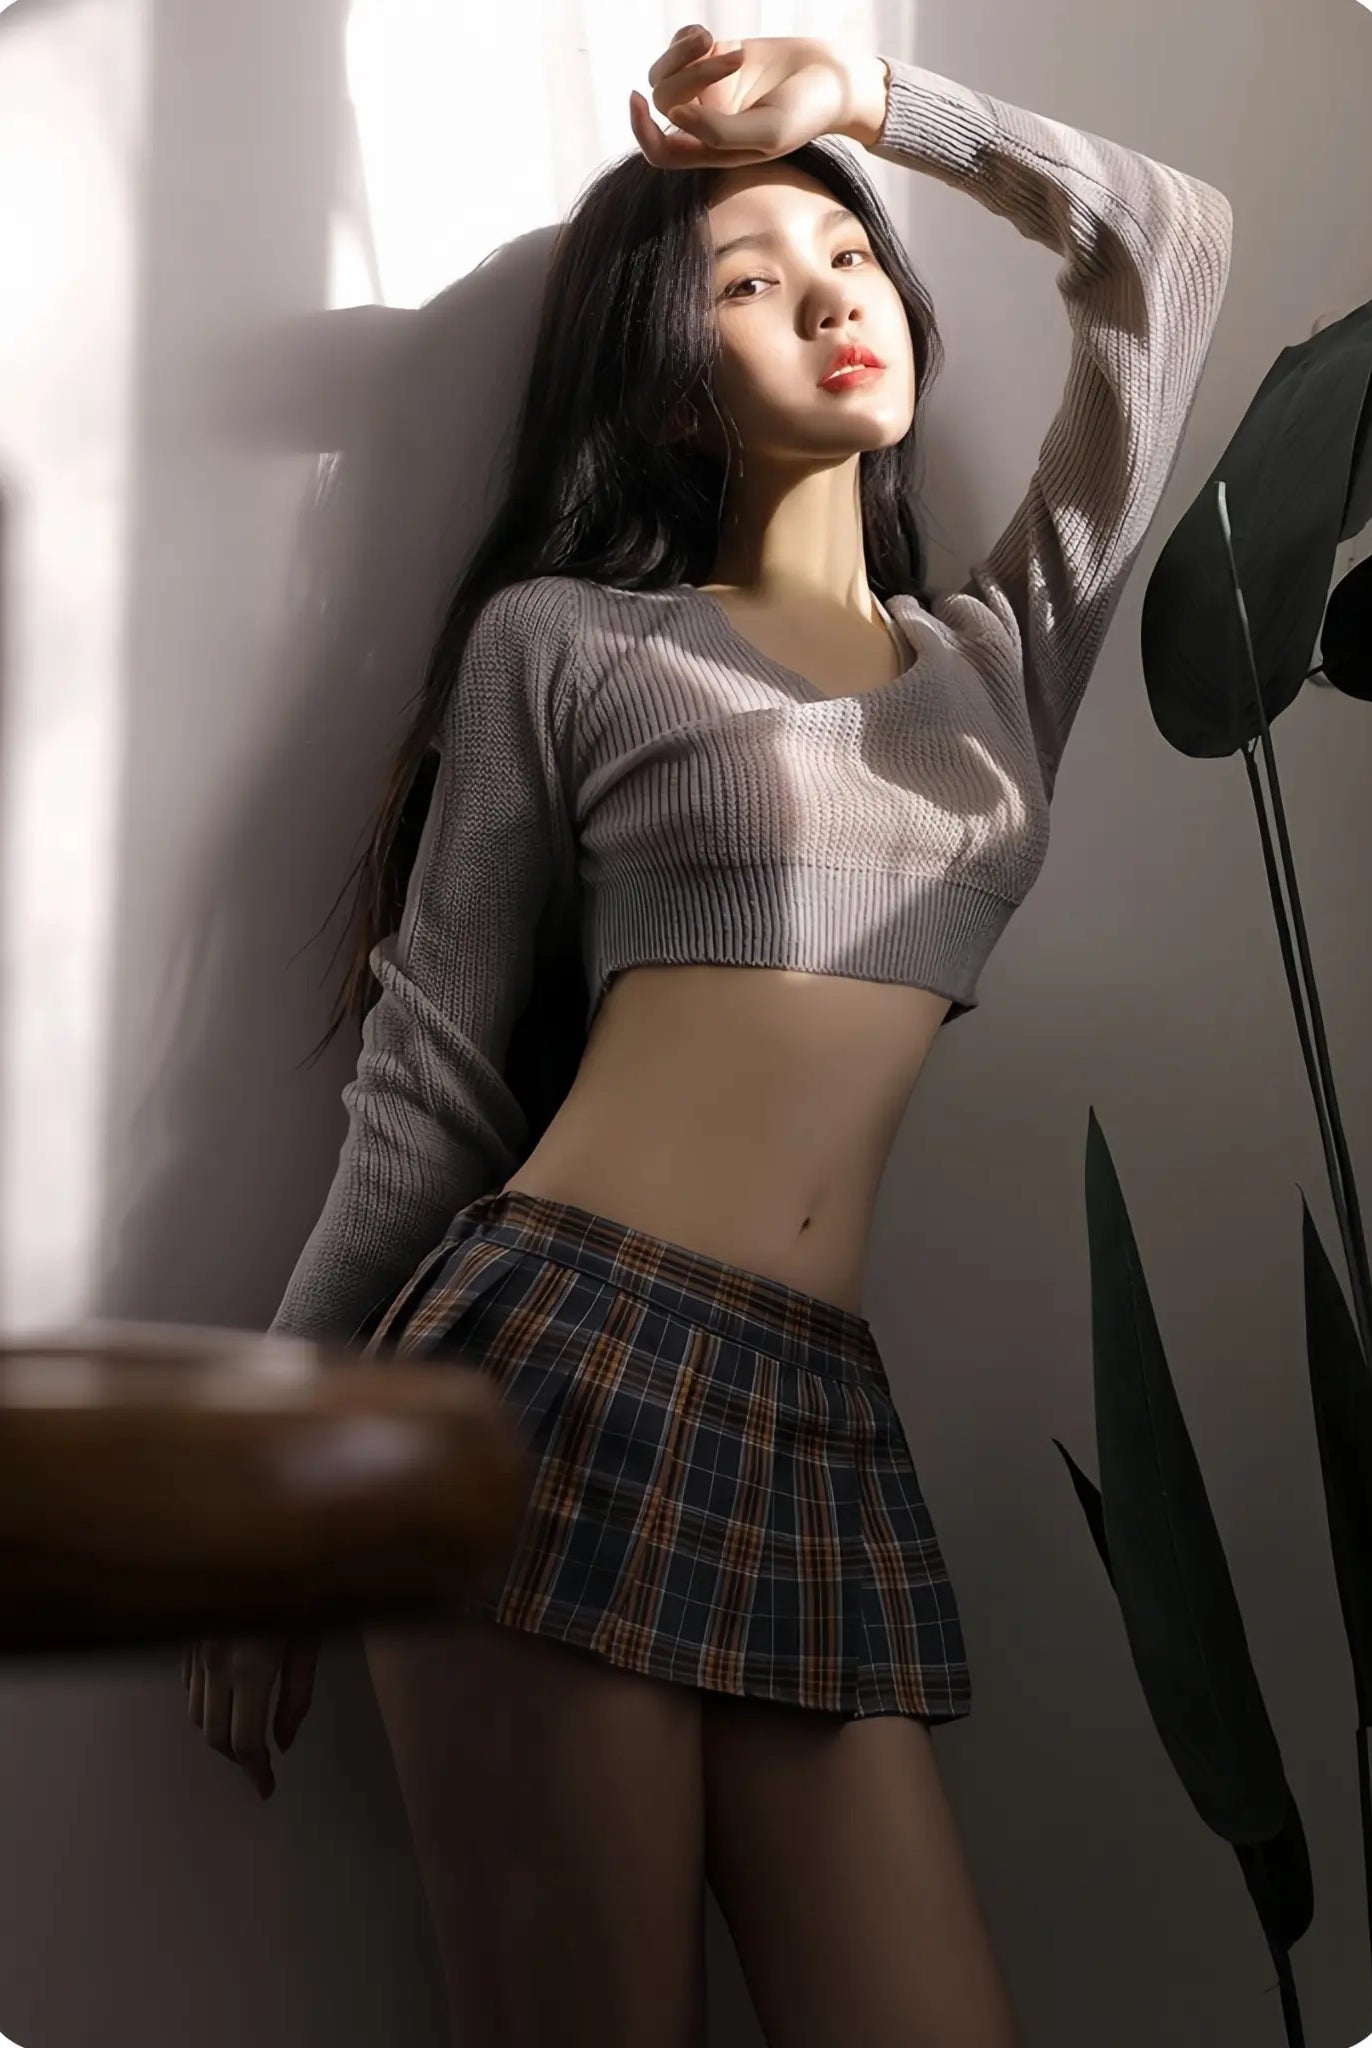 Cute Schoolgirl JK Sweater Uniform Sheer Lingerie Peach Passion